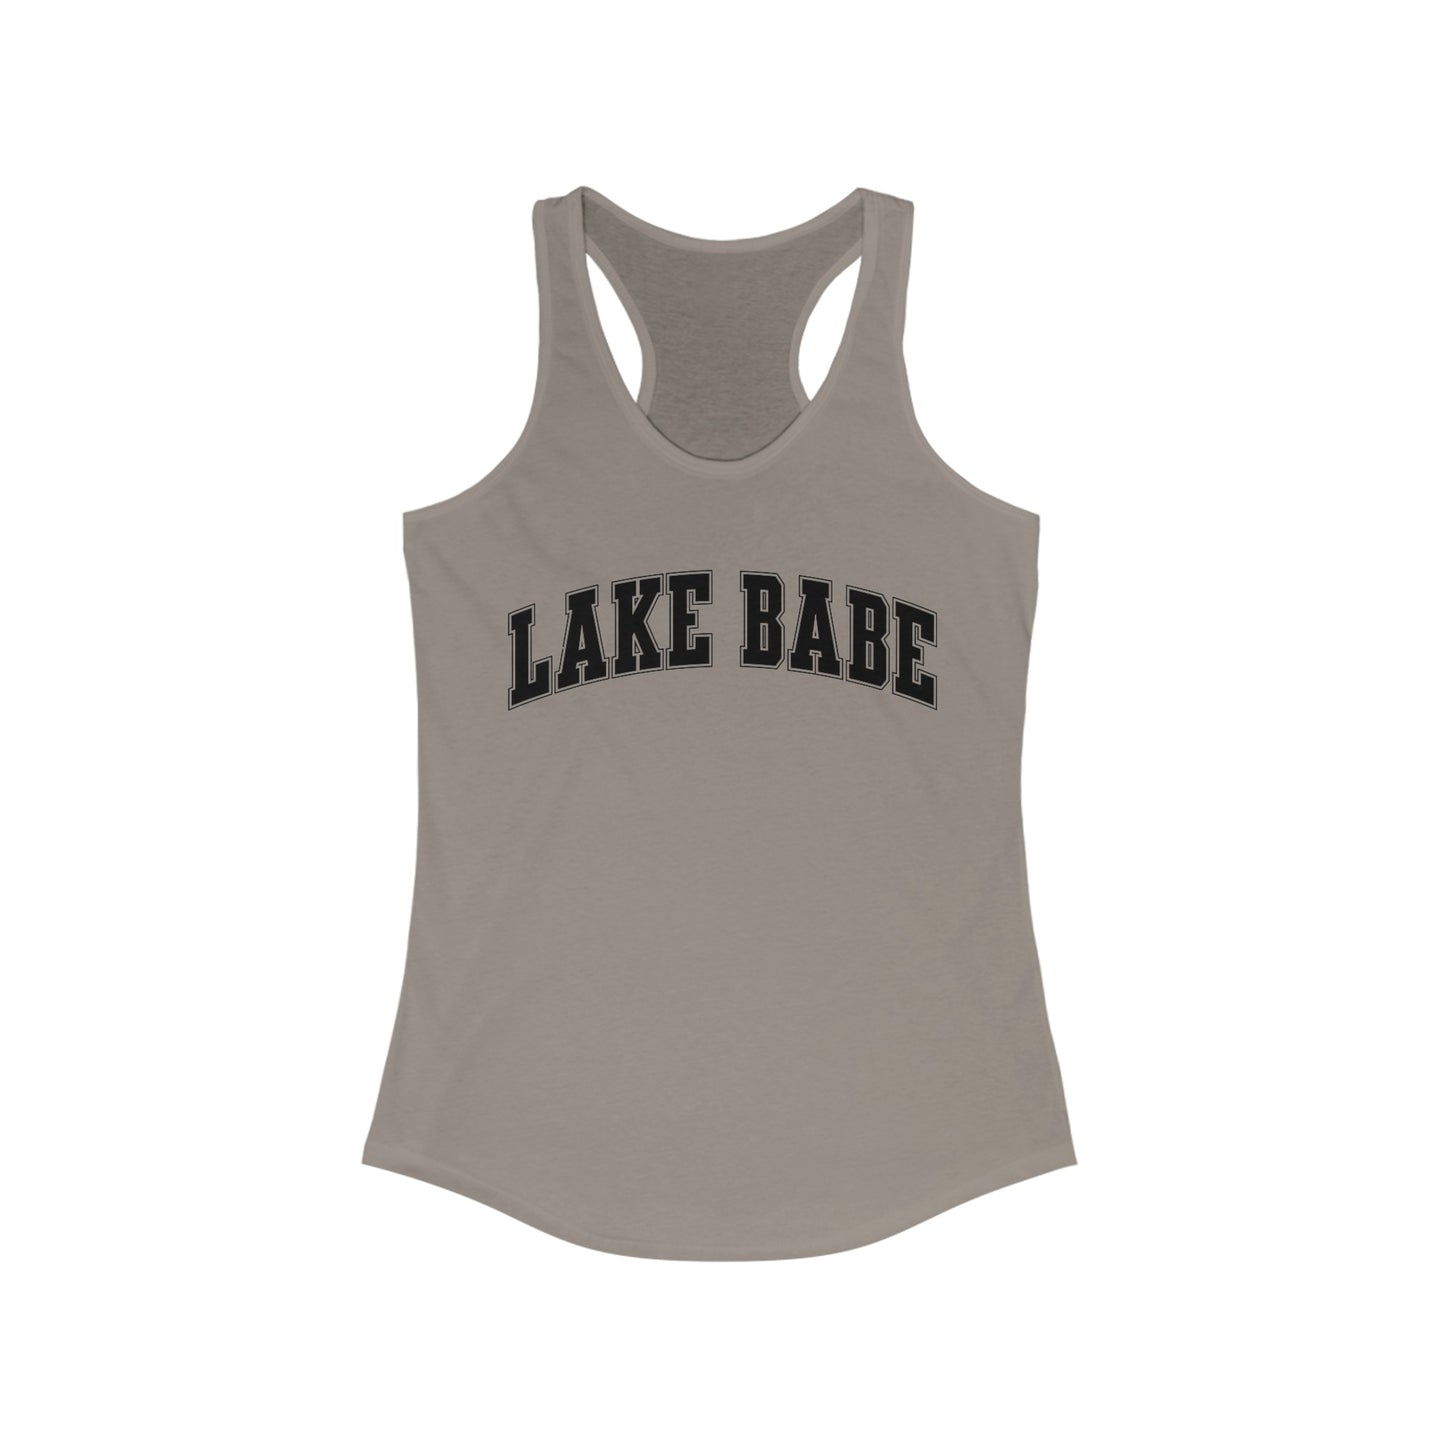 Lake Babe - Women's Ideal Racerback Tank